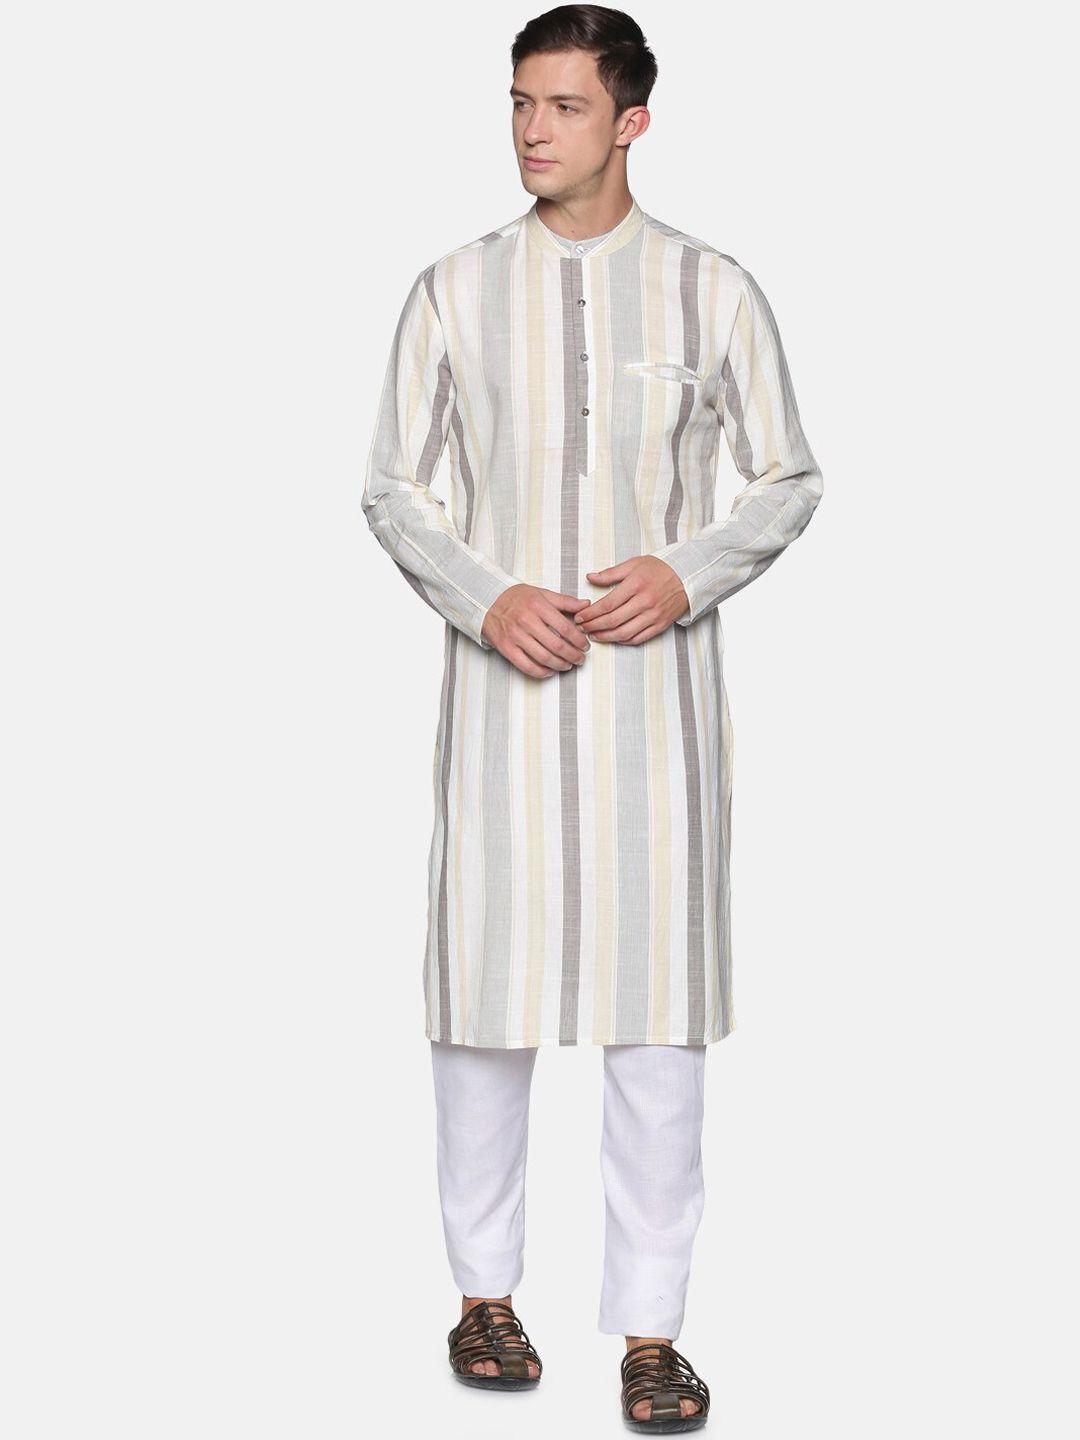 saffron threads men off white & grey striped kurta